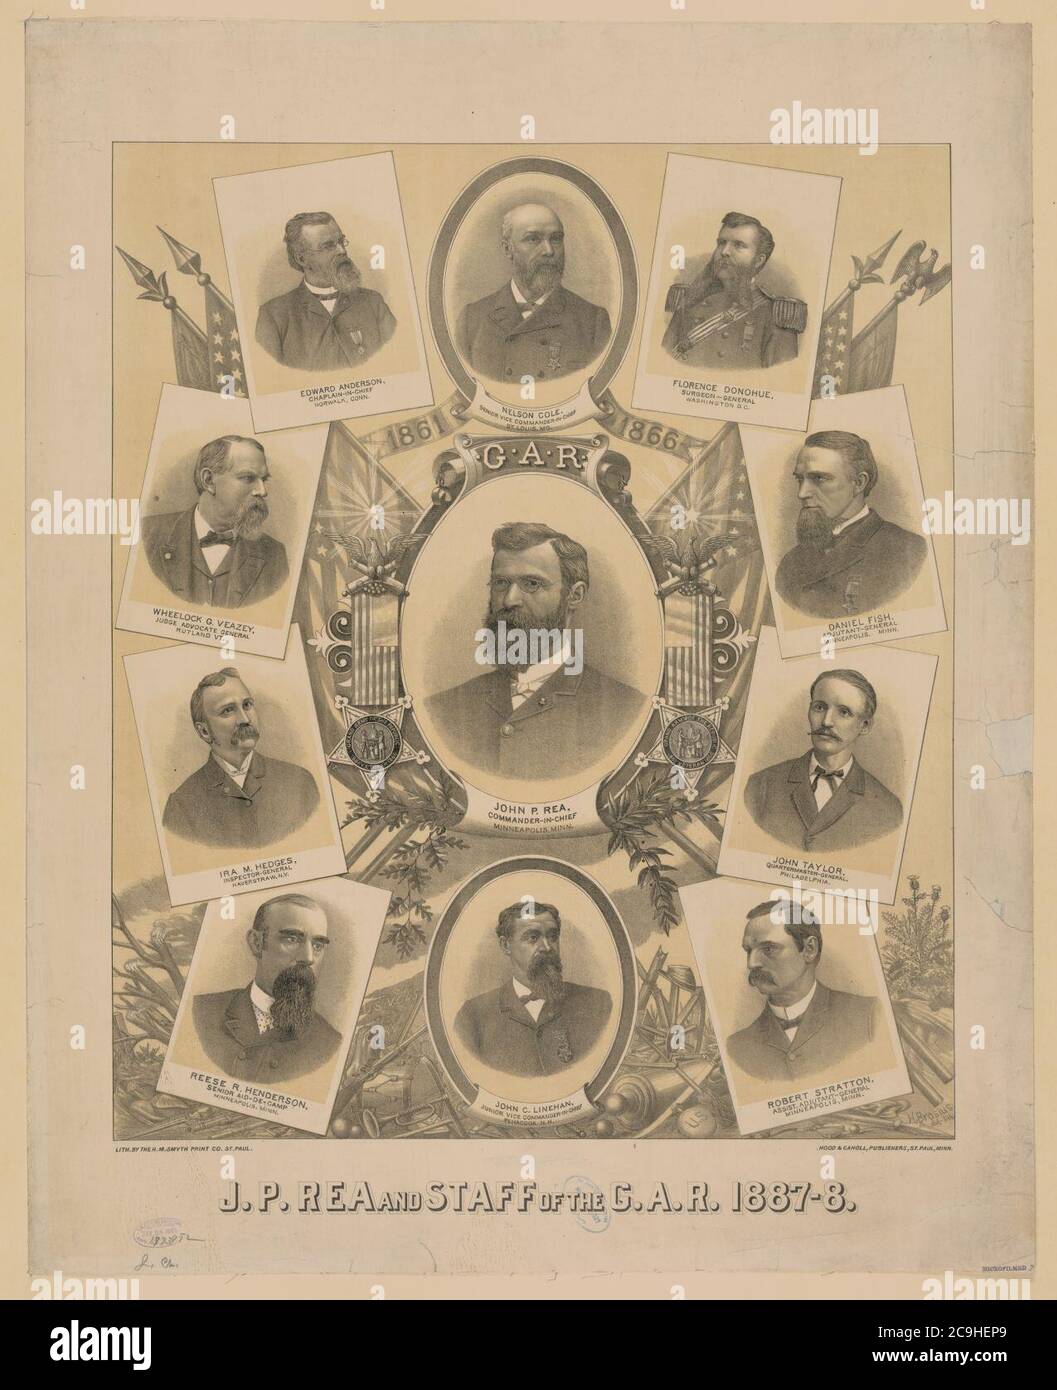 J.P. Rea and staff of the G.A.R. 1887-8 - lith. by the H.M. Smyth Print Co., St. Paul ; H. Brosius, del. lith. Stock Photo